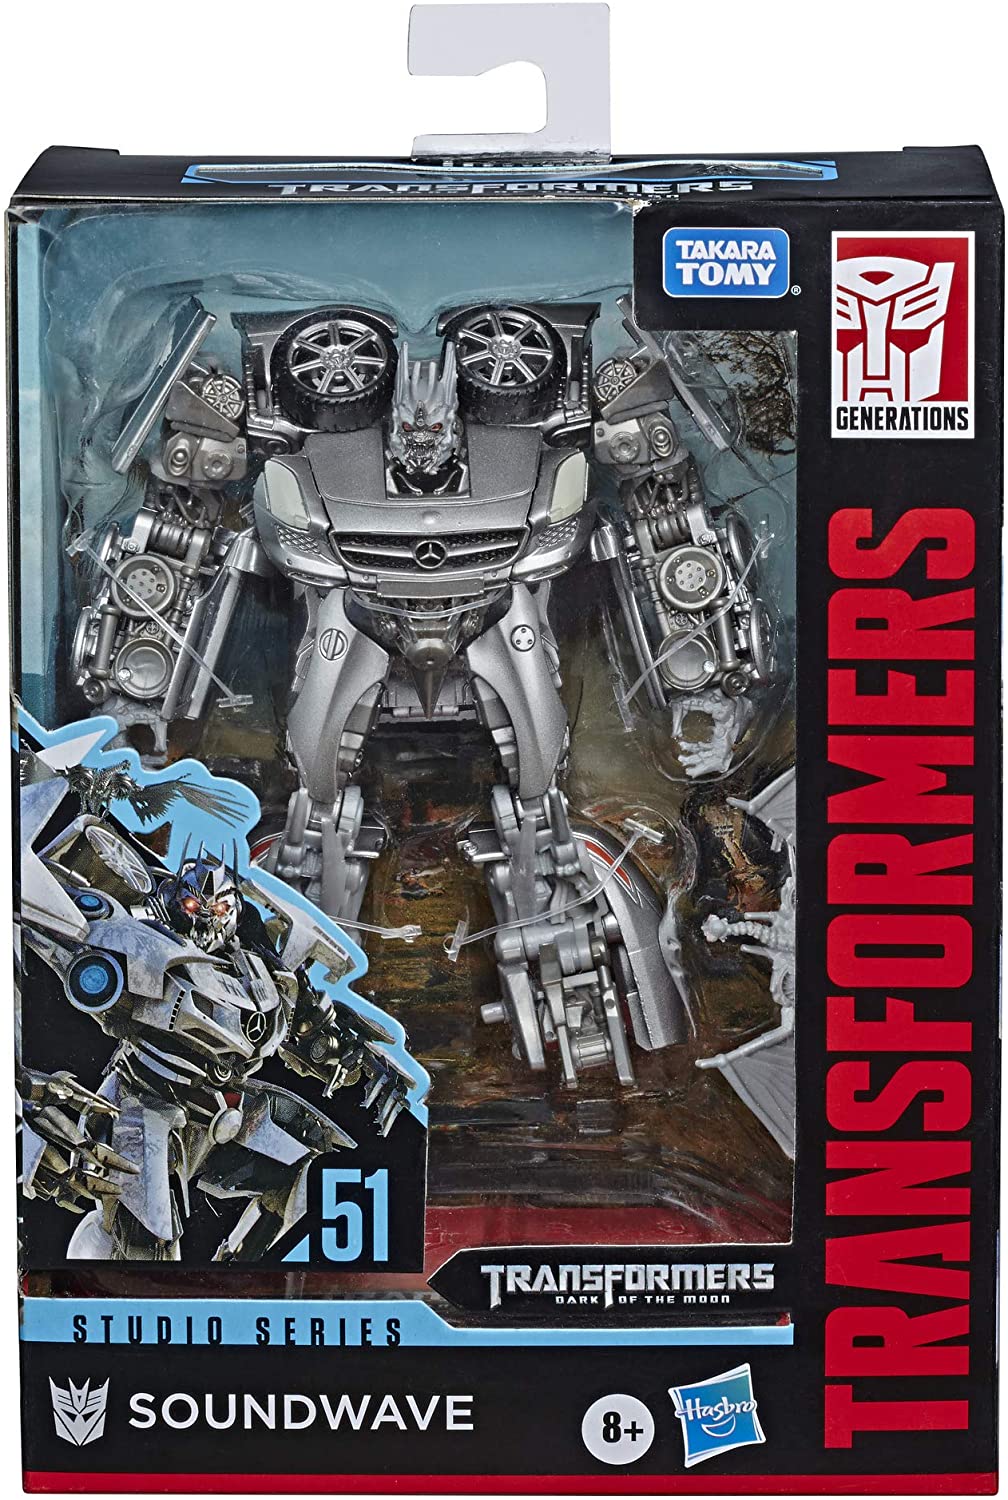 Transformers Studio Series - Soundwave 51 - Original Hasbro